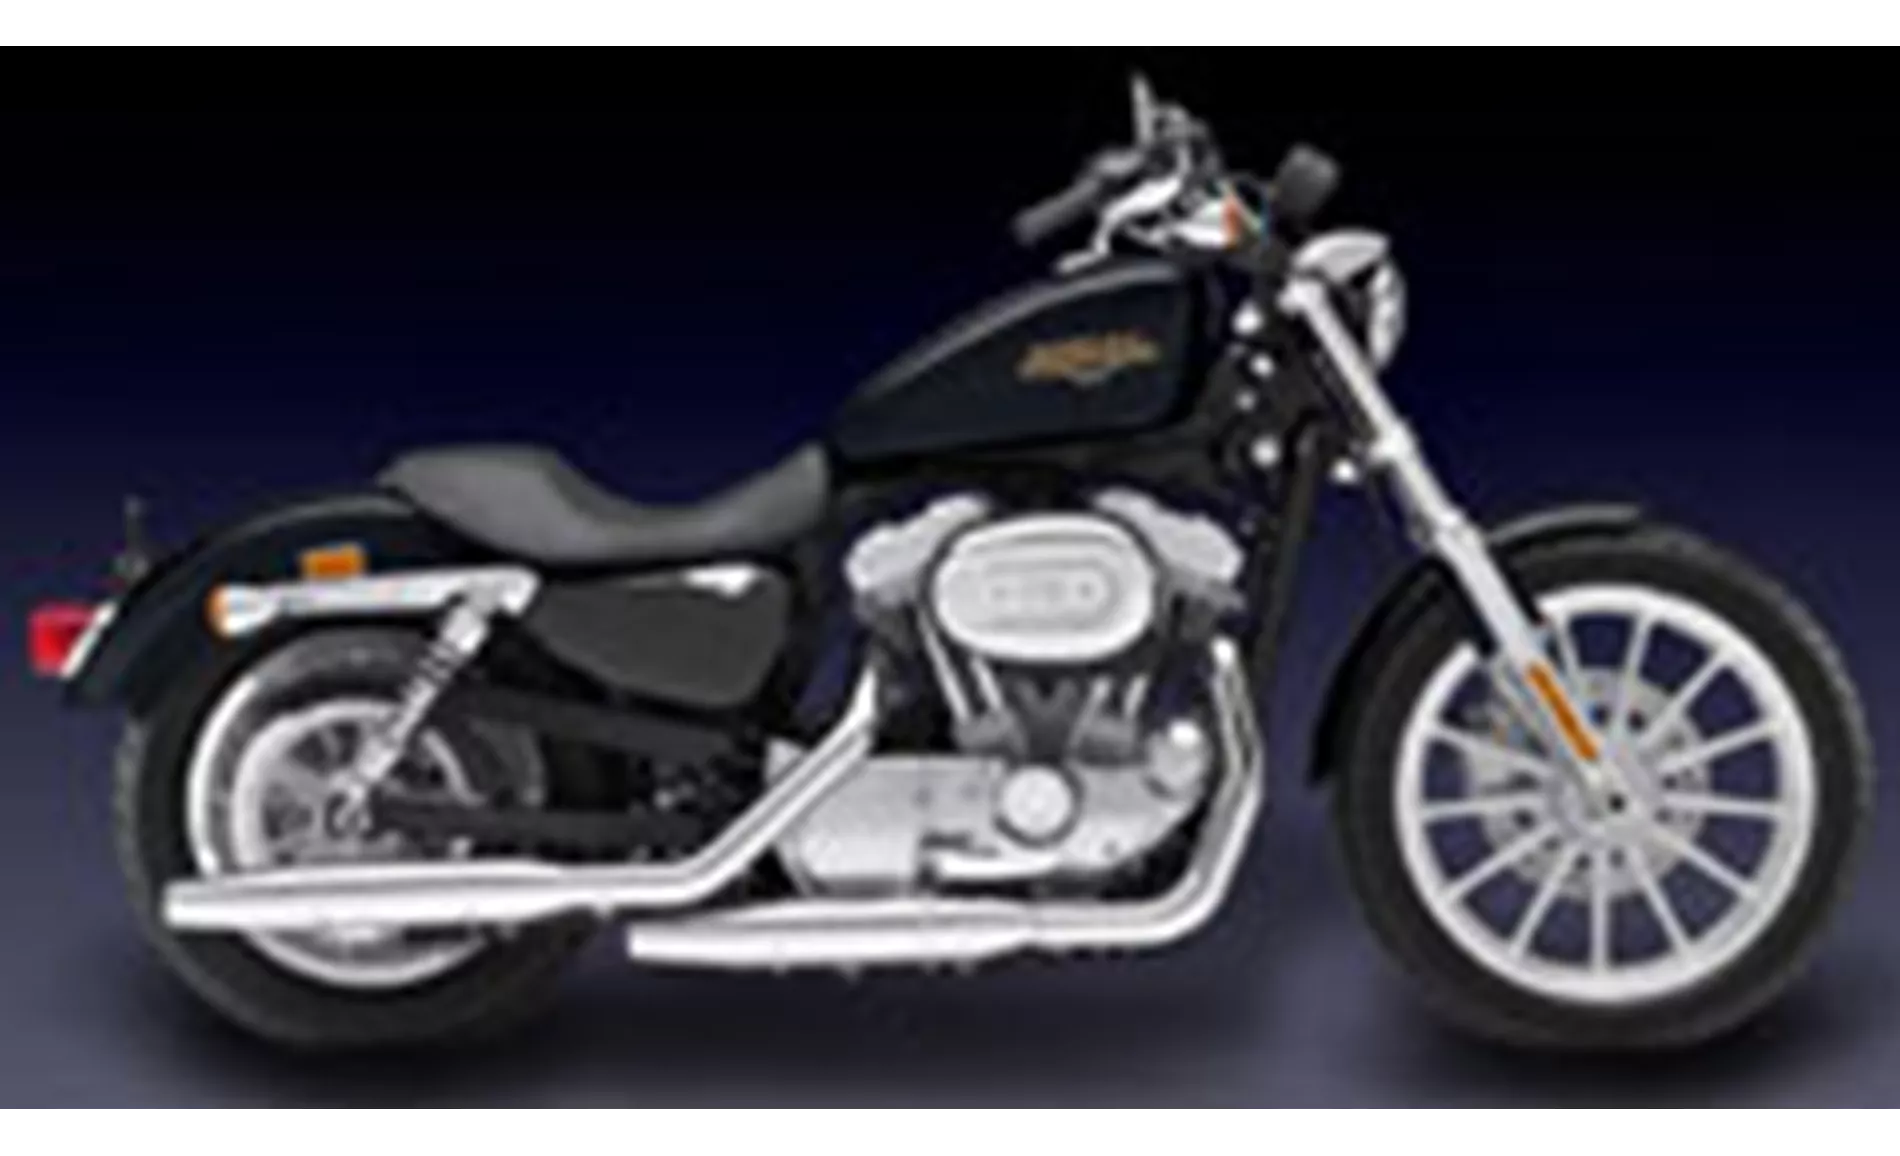 Harley-Davidson Sportster XL 883 L SuperLow 2009